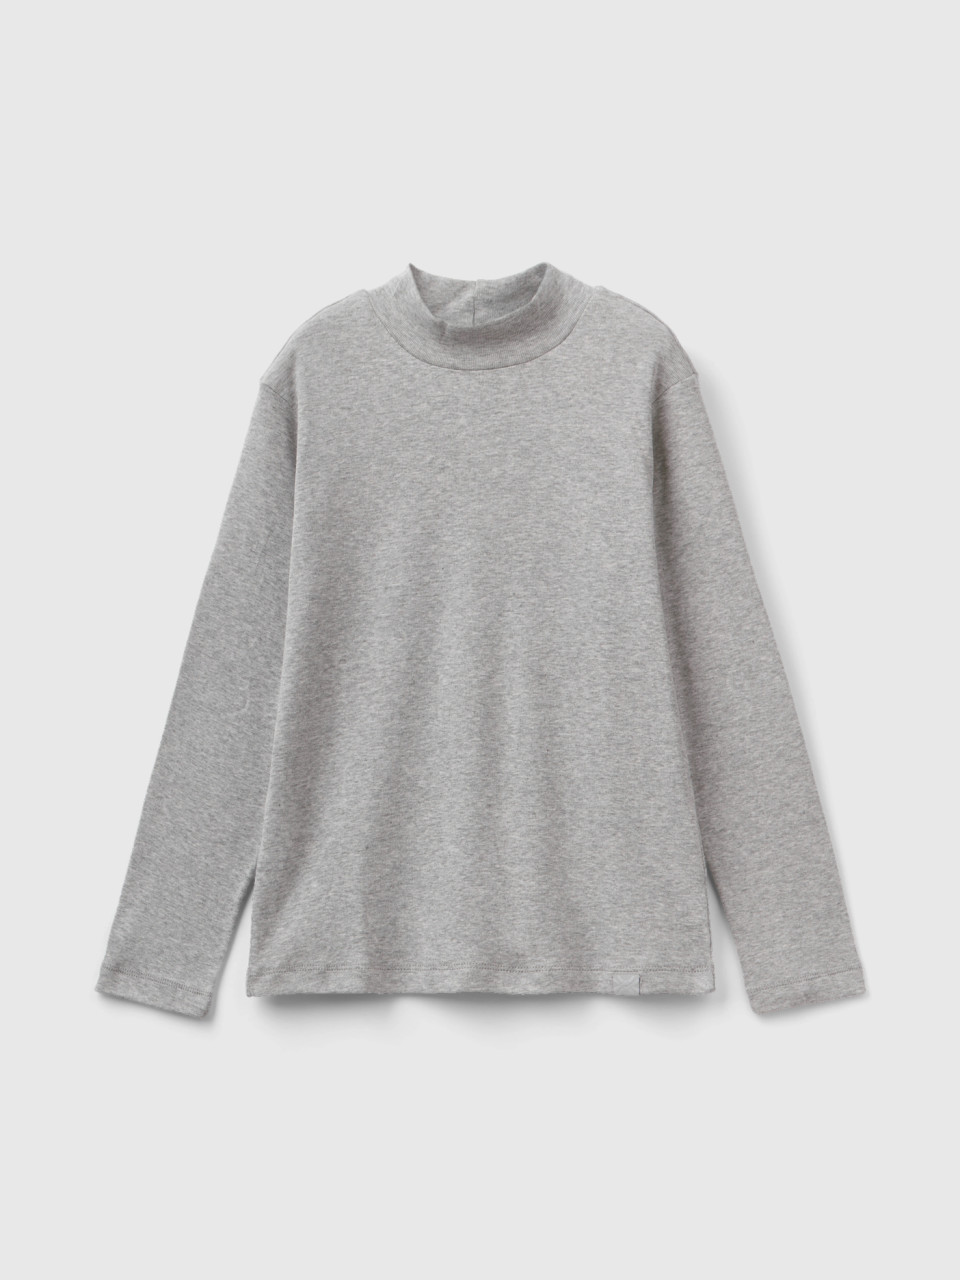 Benetton, Rubbed Knit Turtleneck T-shirt, Gray, Kids